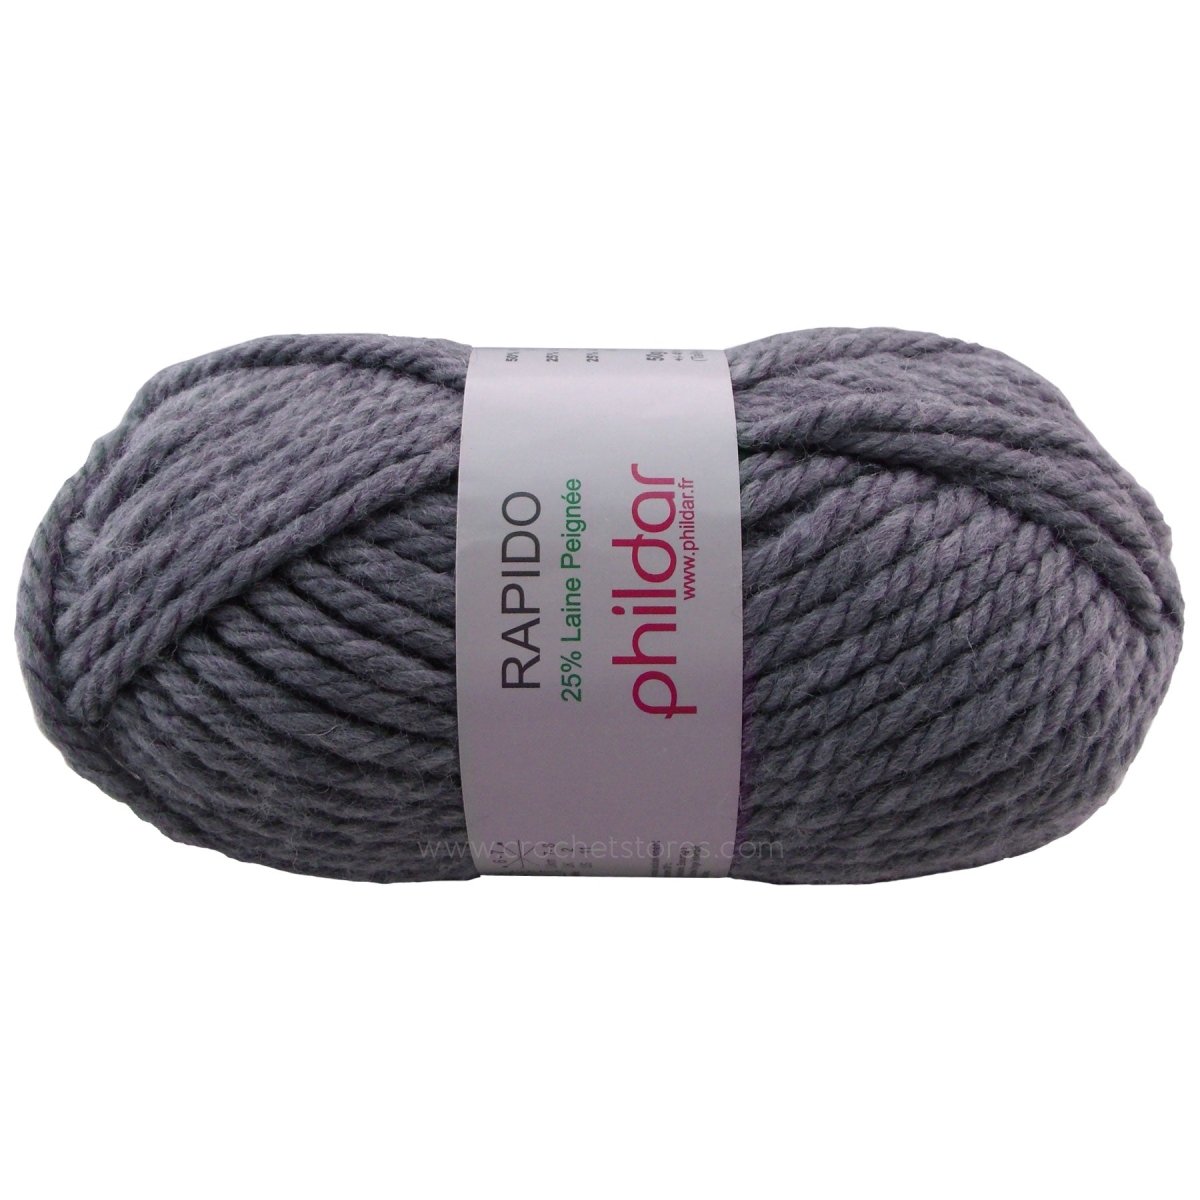 RAPIDO - Crochetstores500981-053307673323090